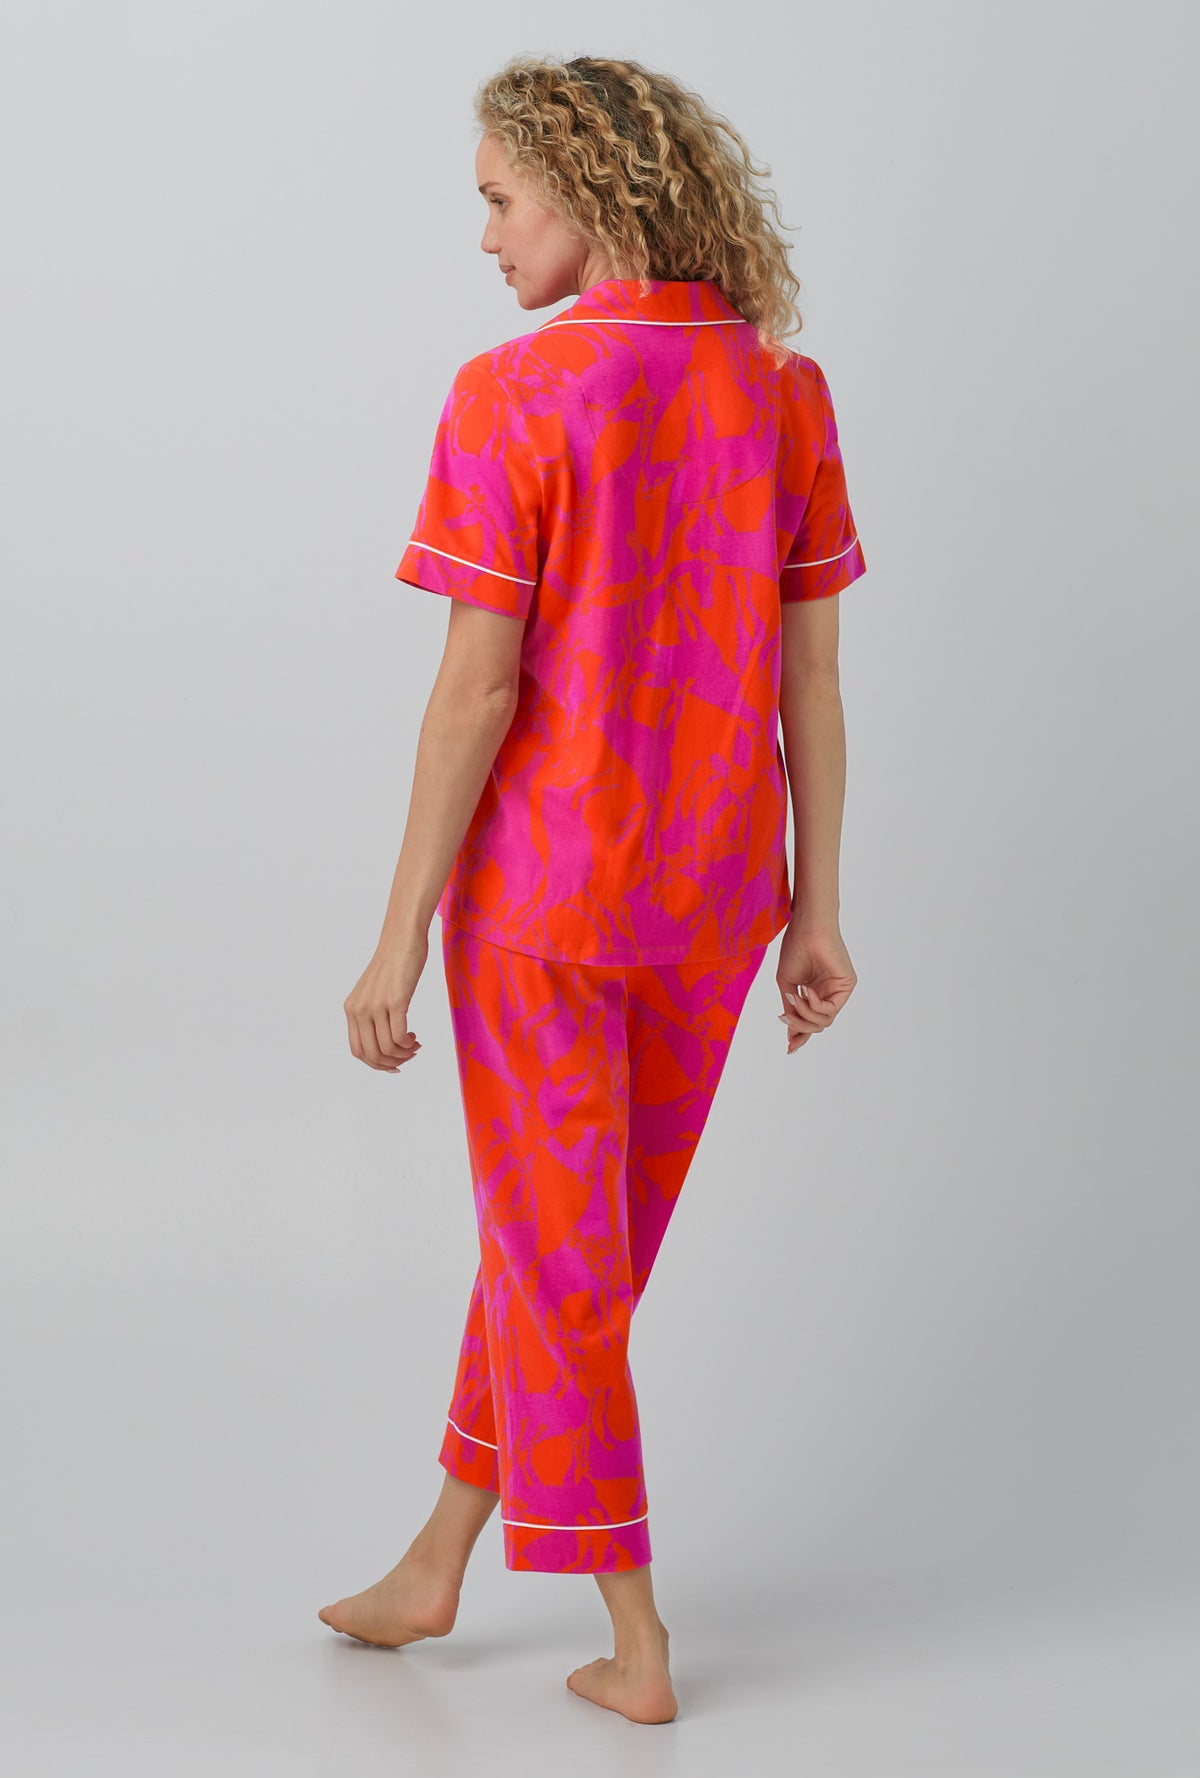 A lady wearing Giraffes Short Sleeve Classic Stretch Jersey Cropped PJ Set